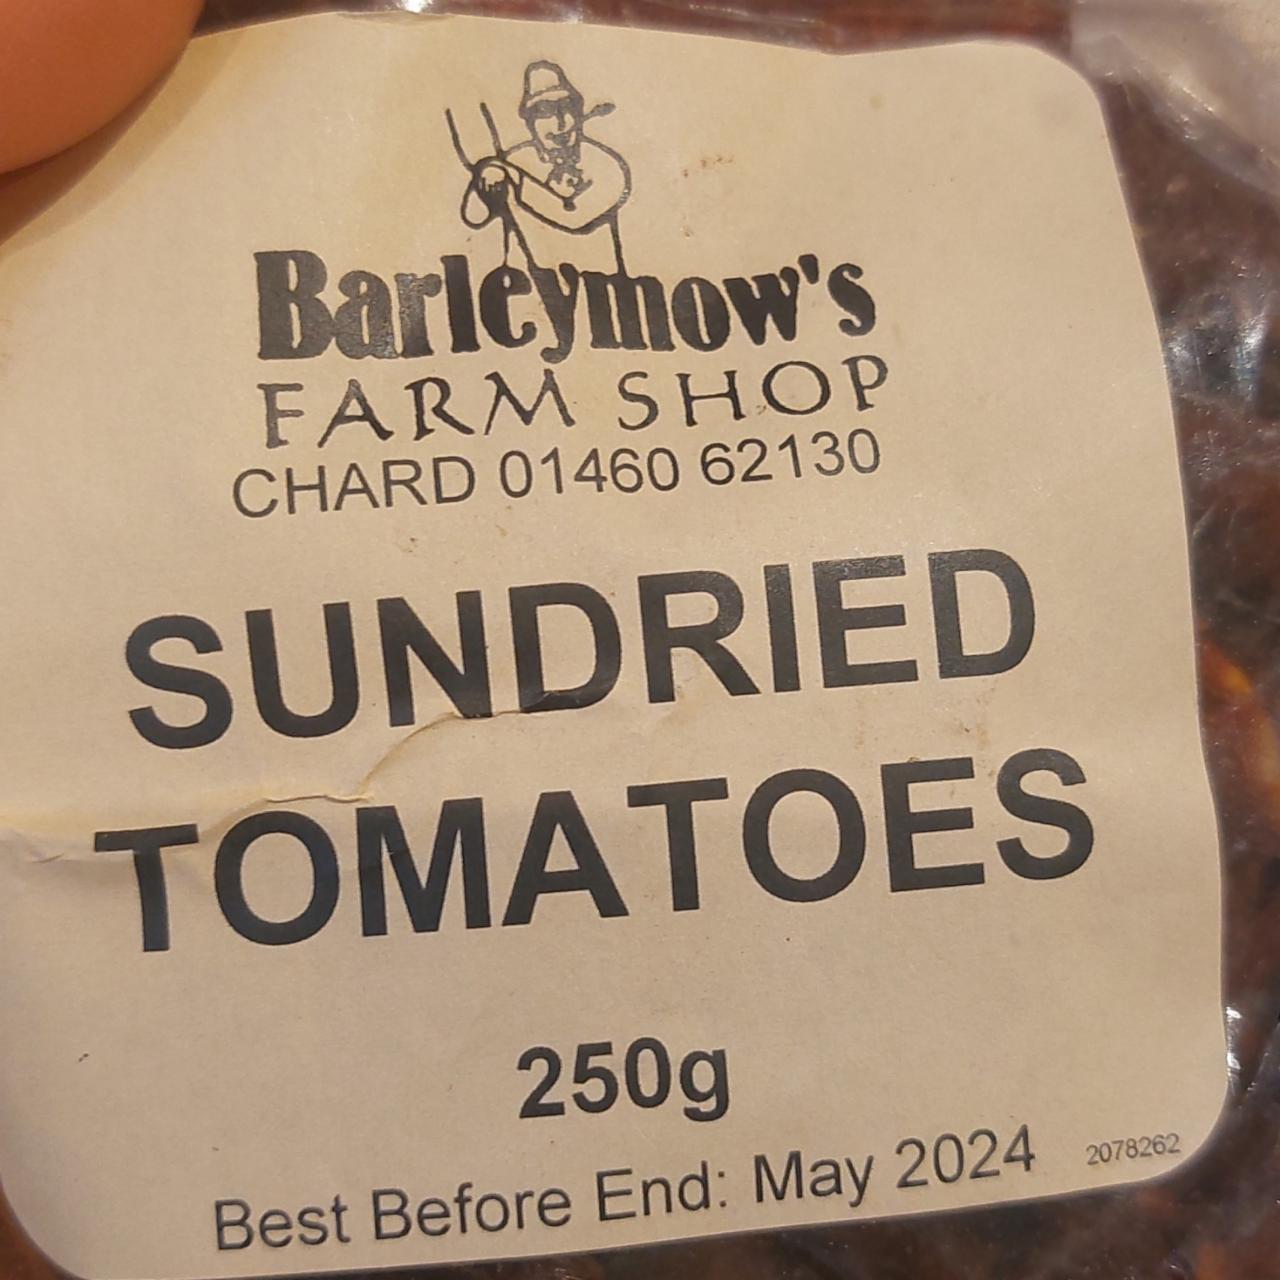 Fotografie - Sundried Tomatoes Barleymow's Farm Shop